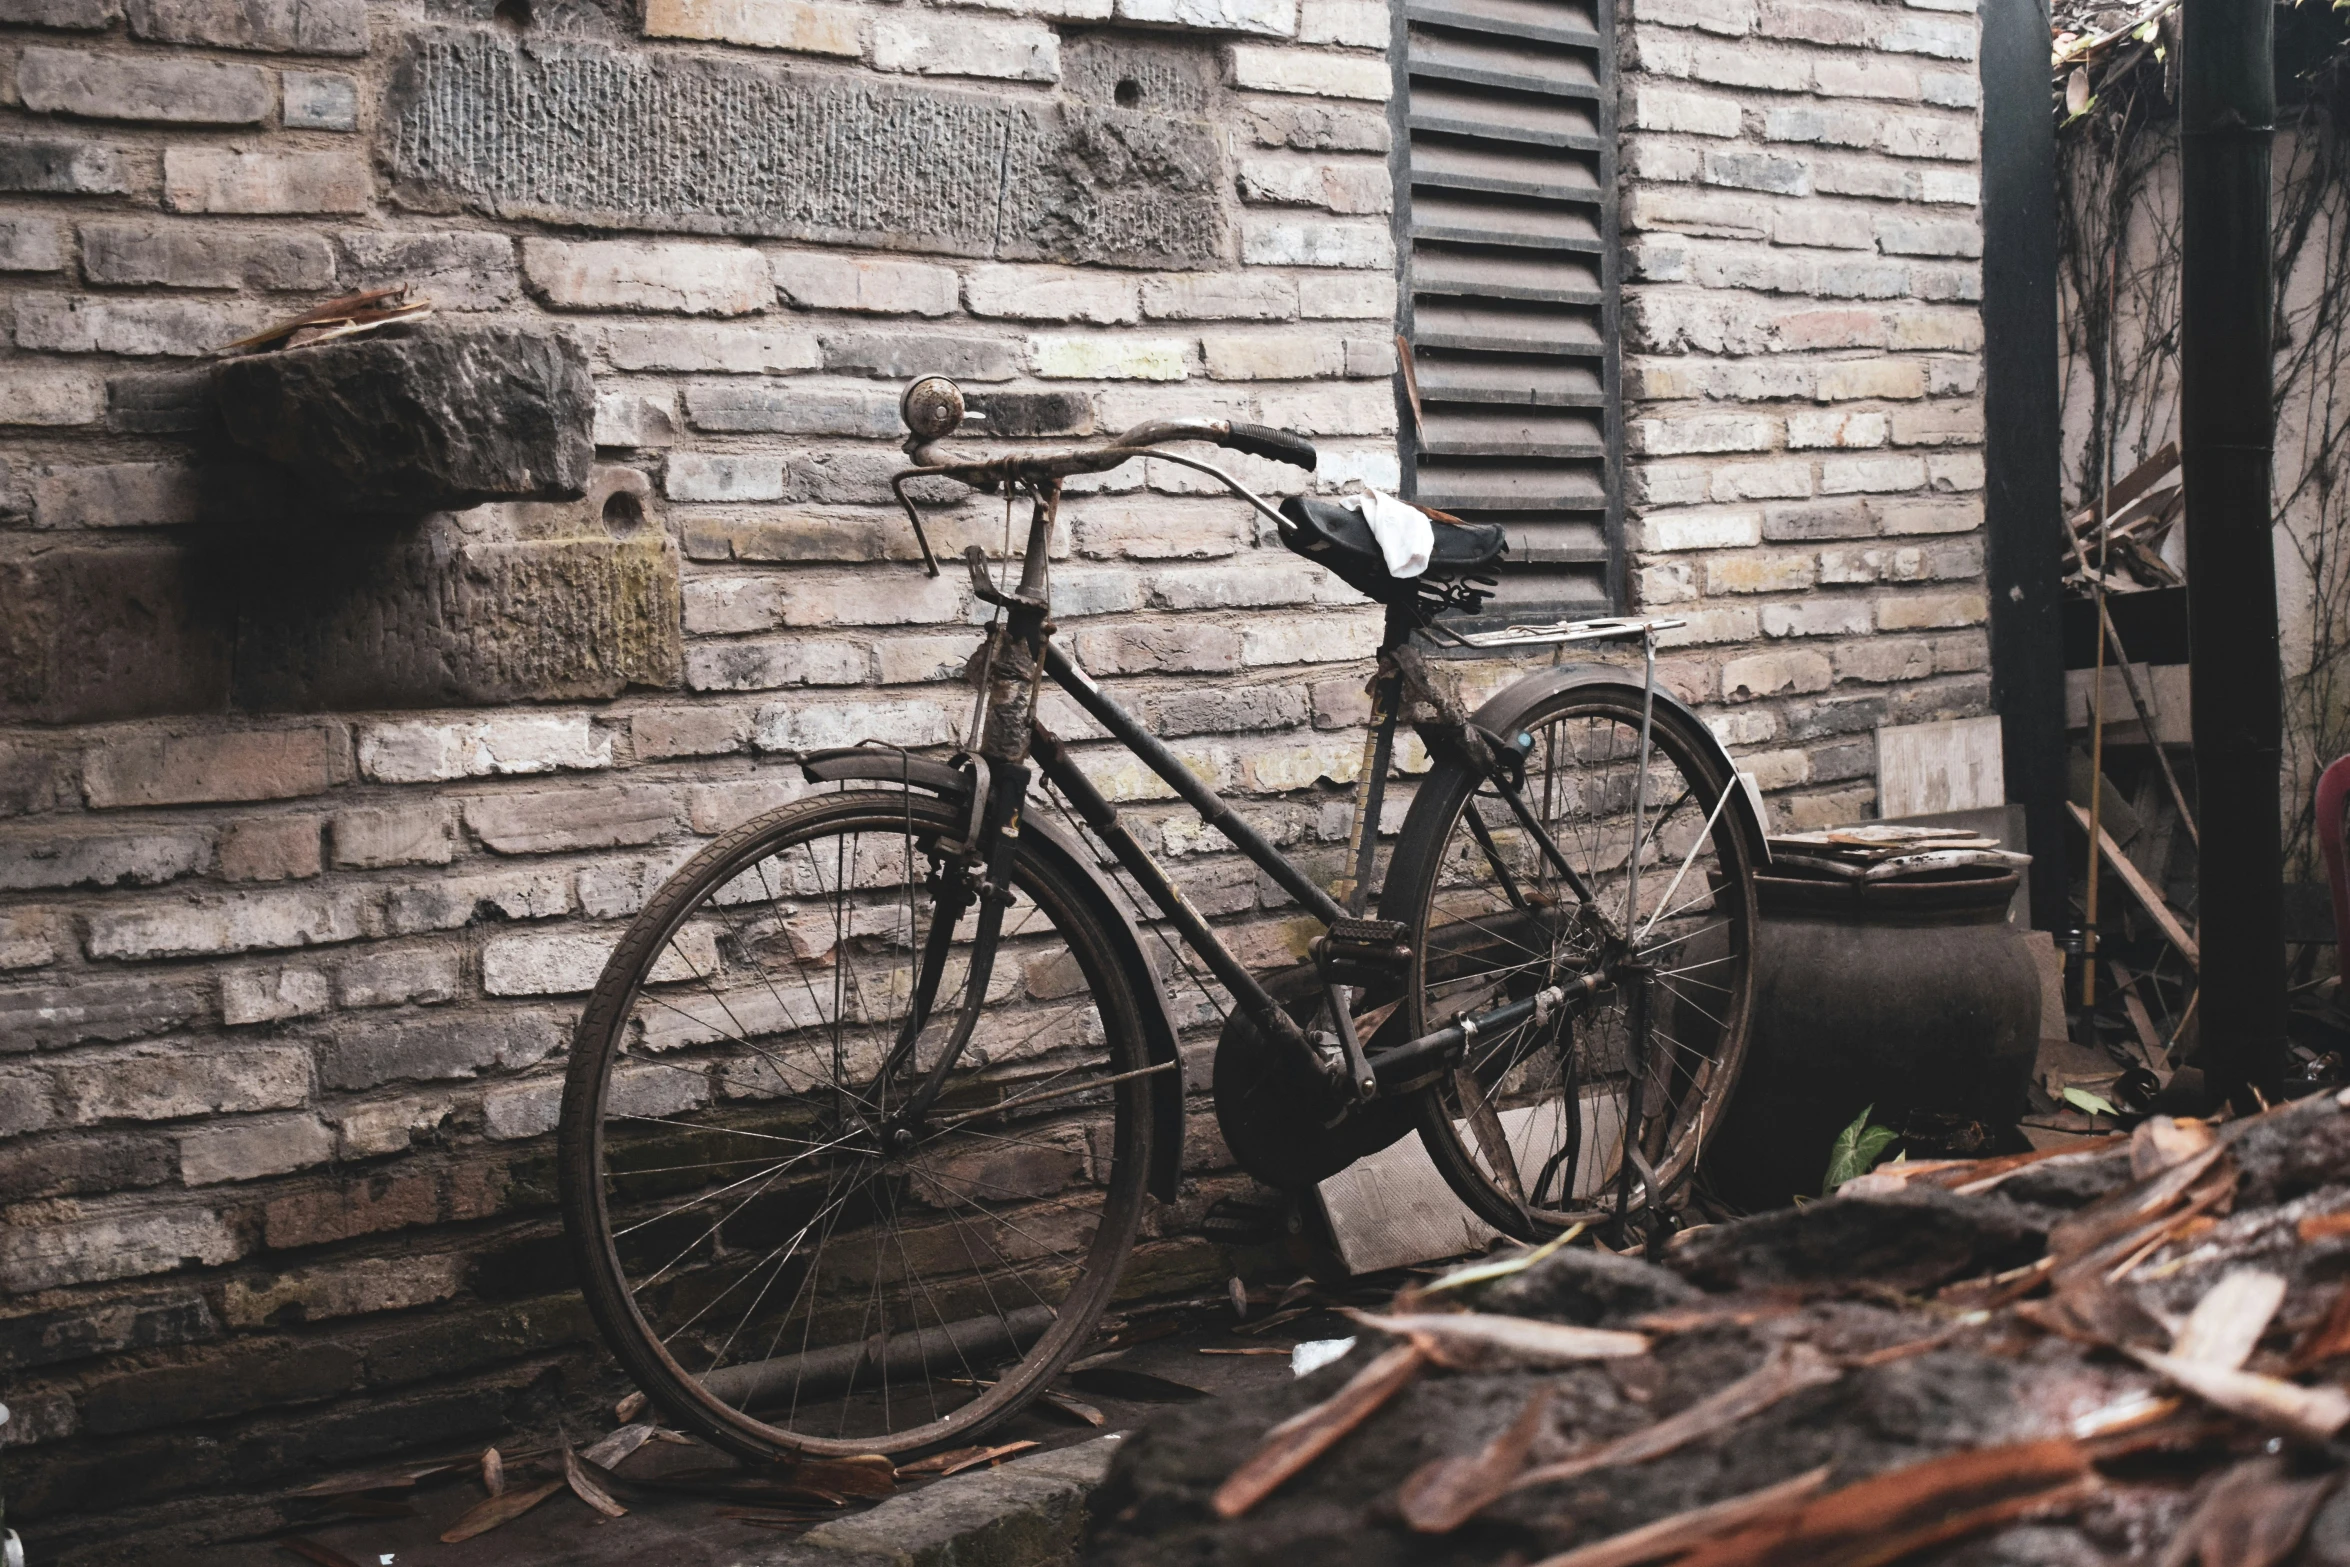 a bike leaning against a brick wall near trash cans